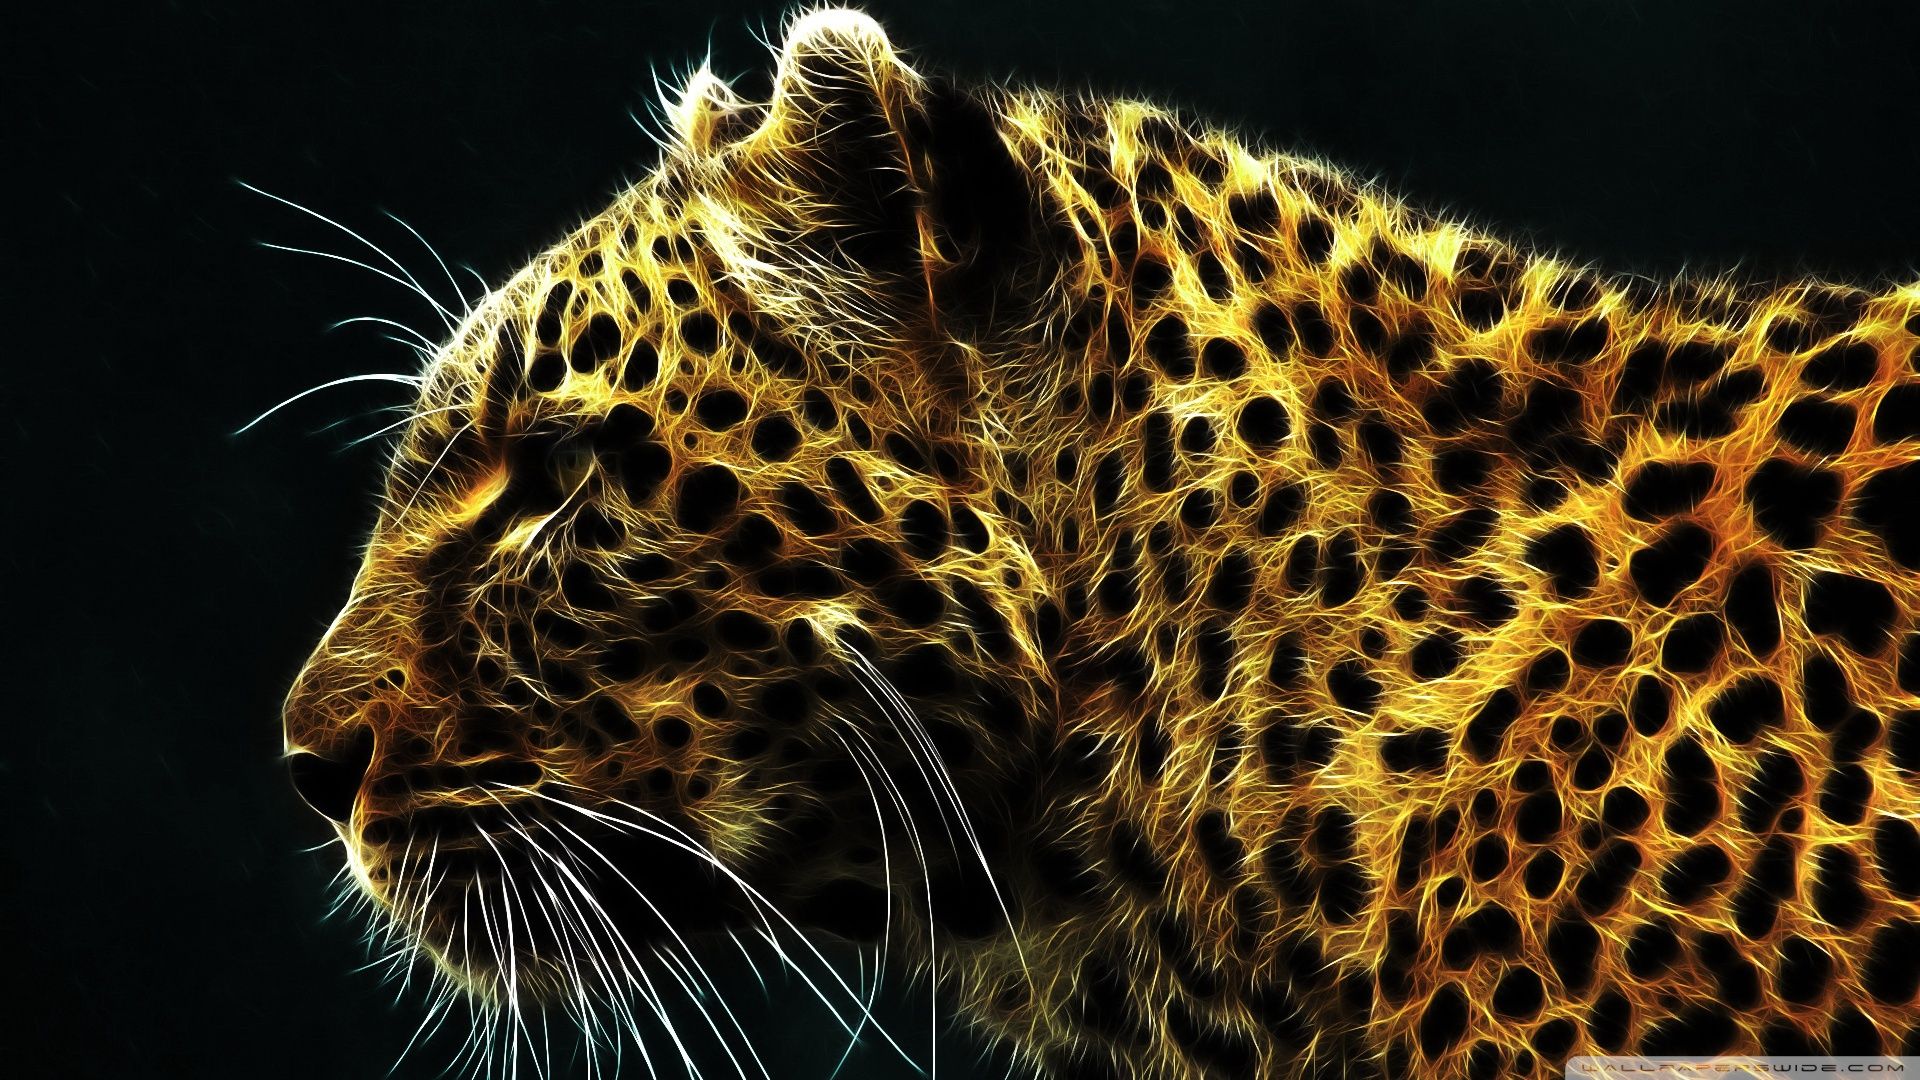 Cheetah In Fire. Leopard wallpaper, Animal wallpaper, Big cats